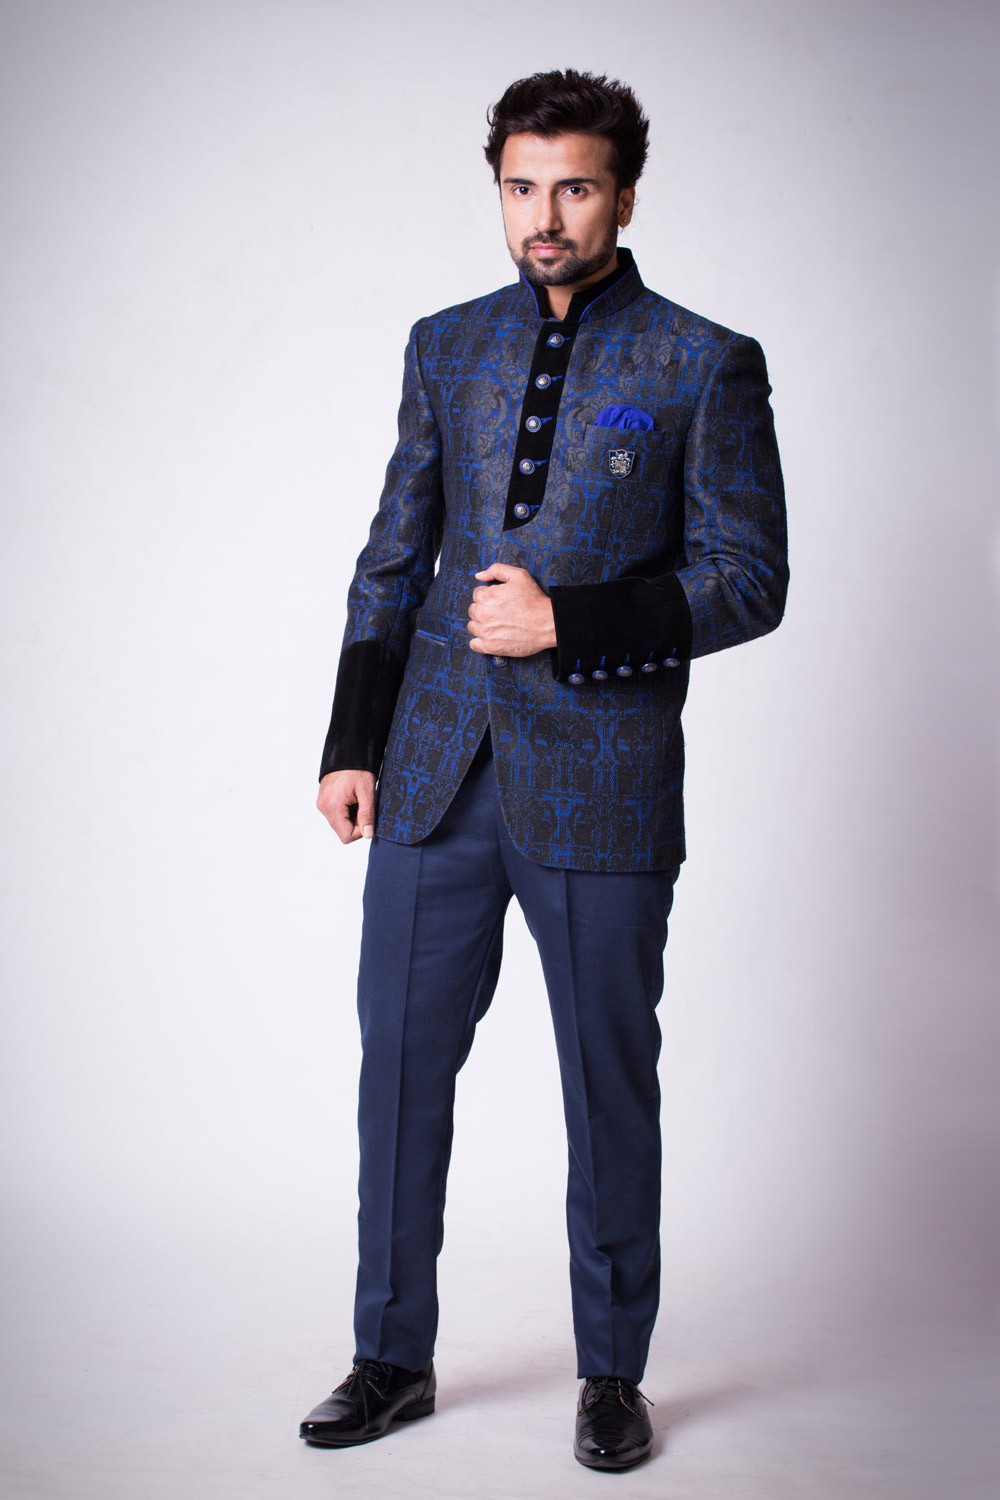 parivarceremony: How to choose best suits for men